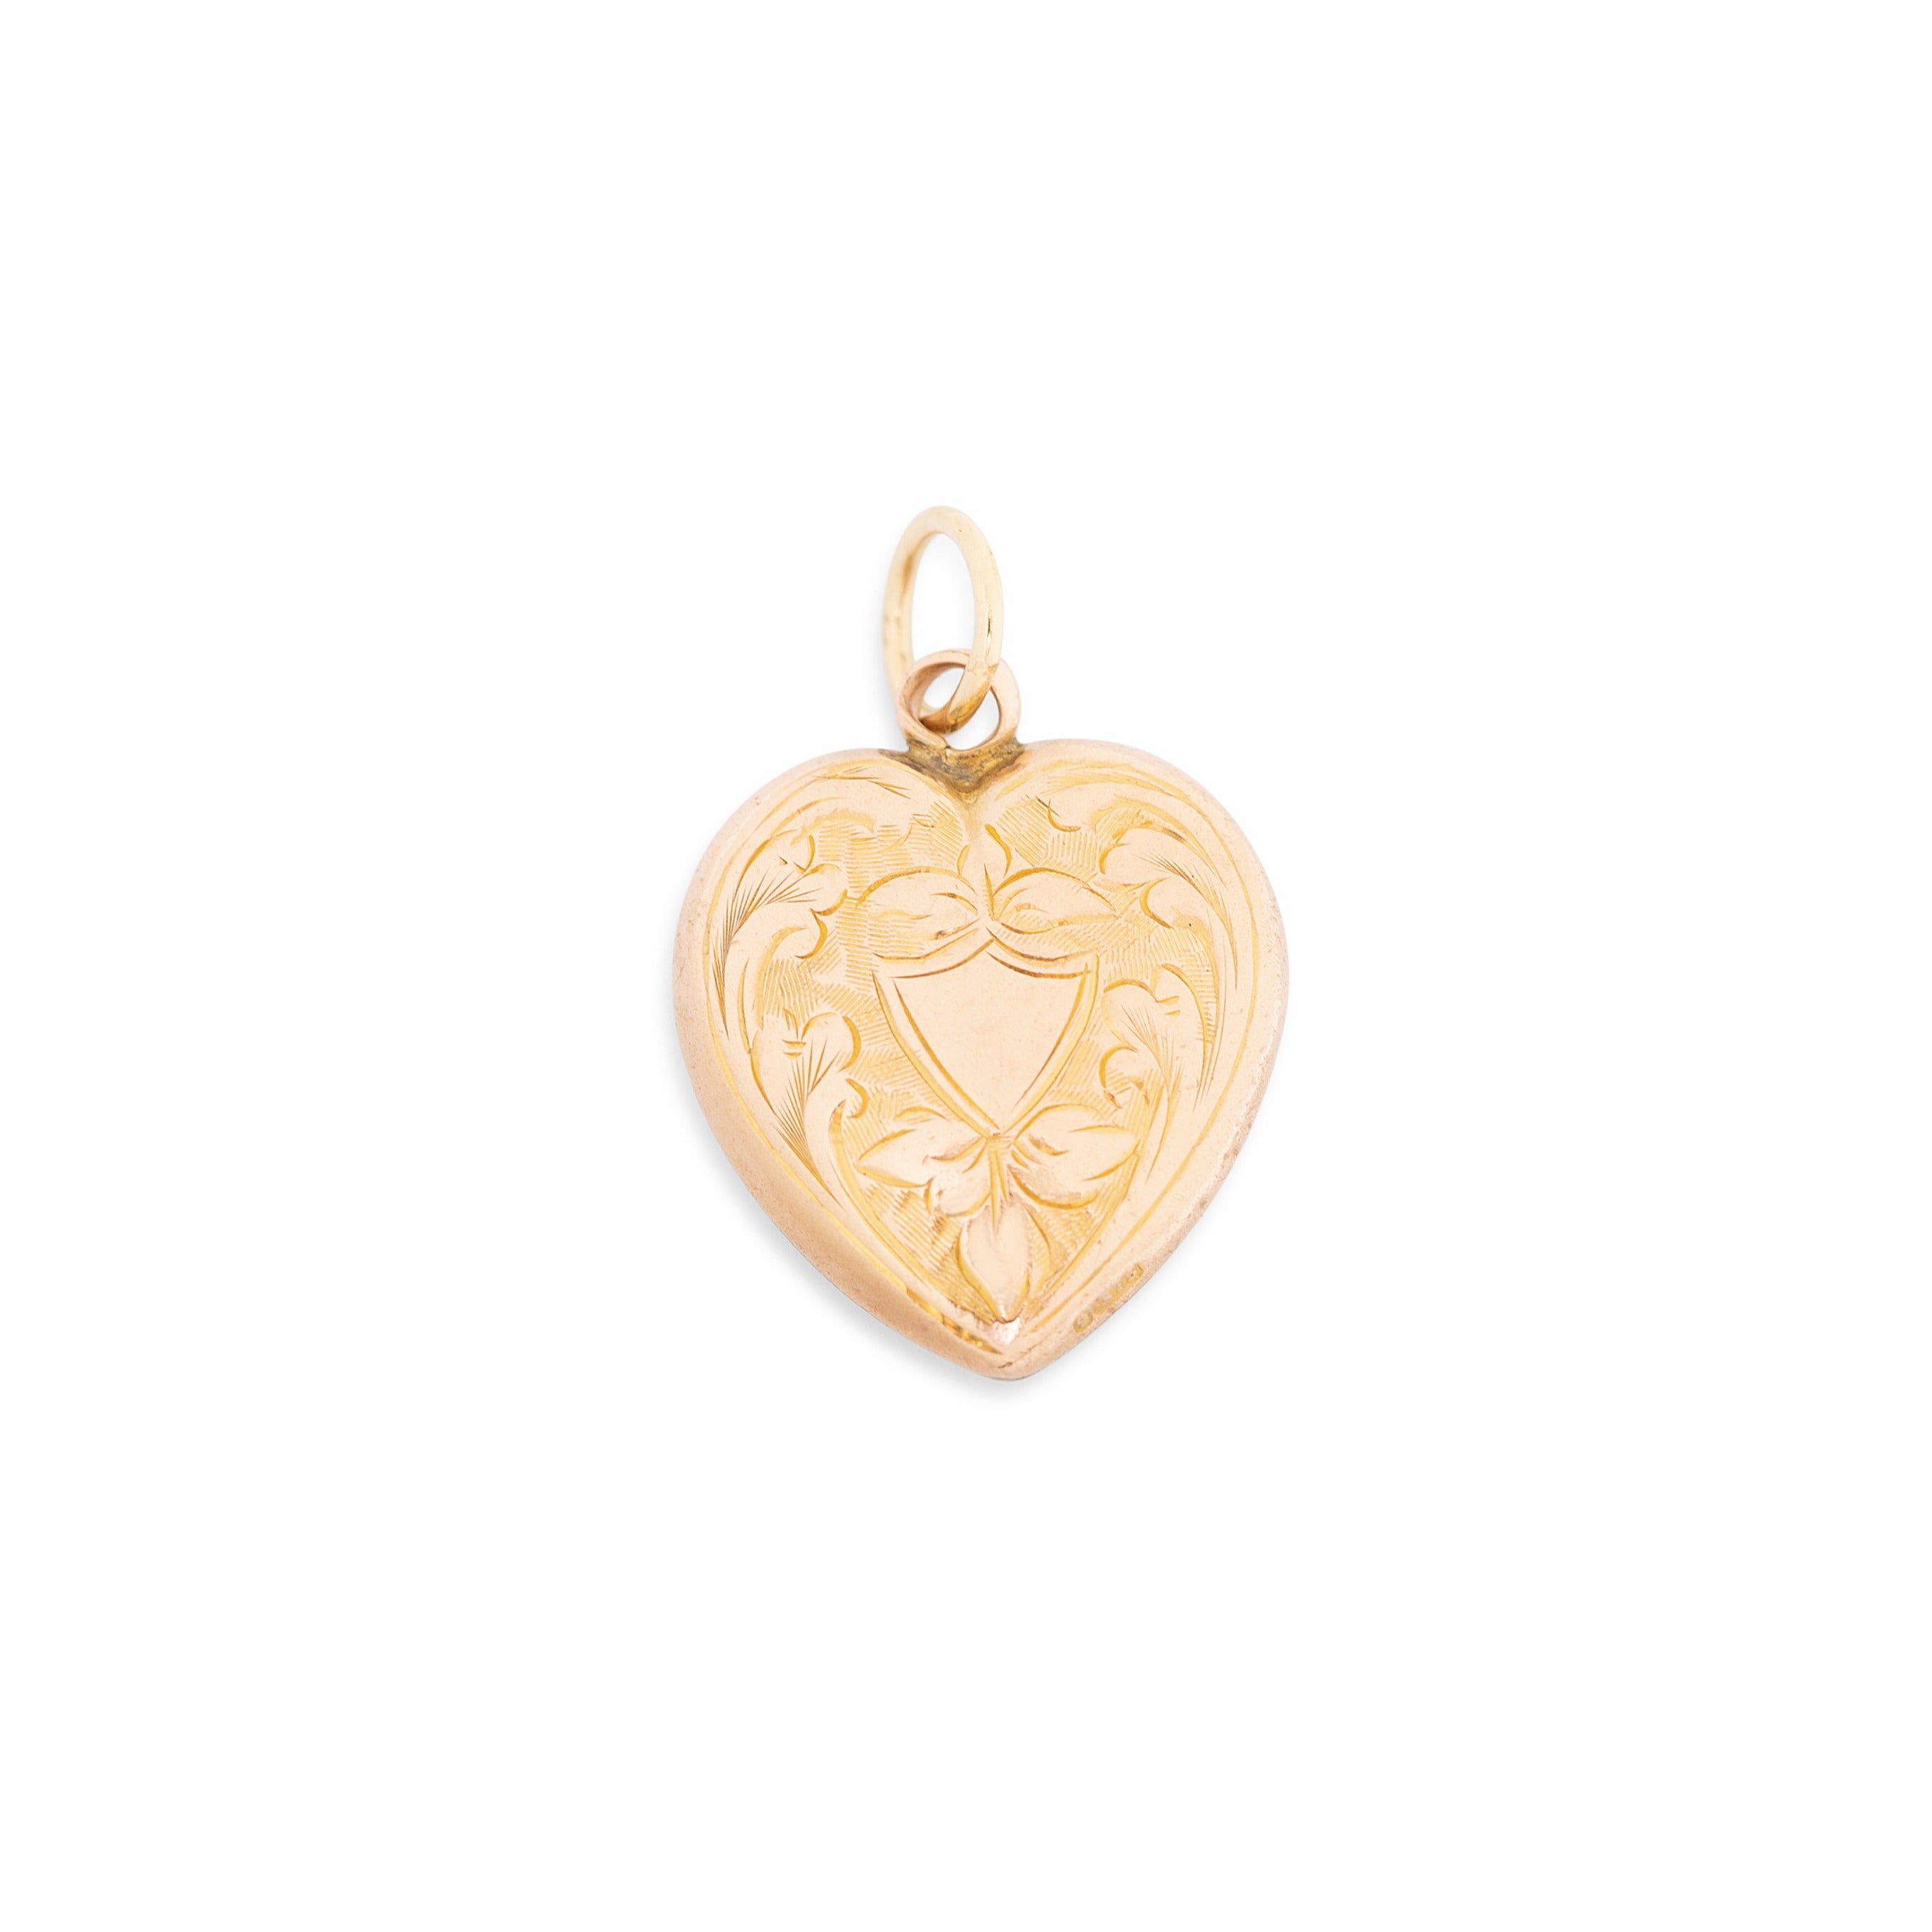 English Engraved Shield Heart 9k Rose Gold Charm